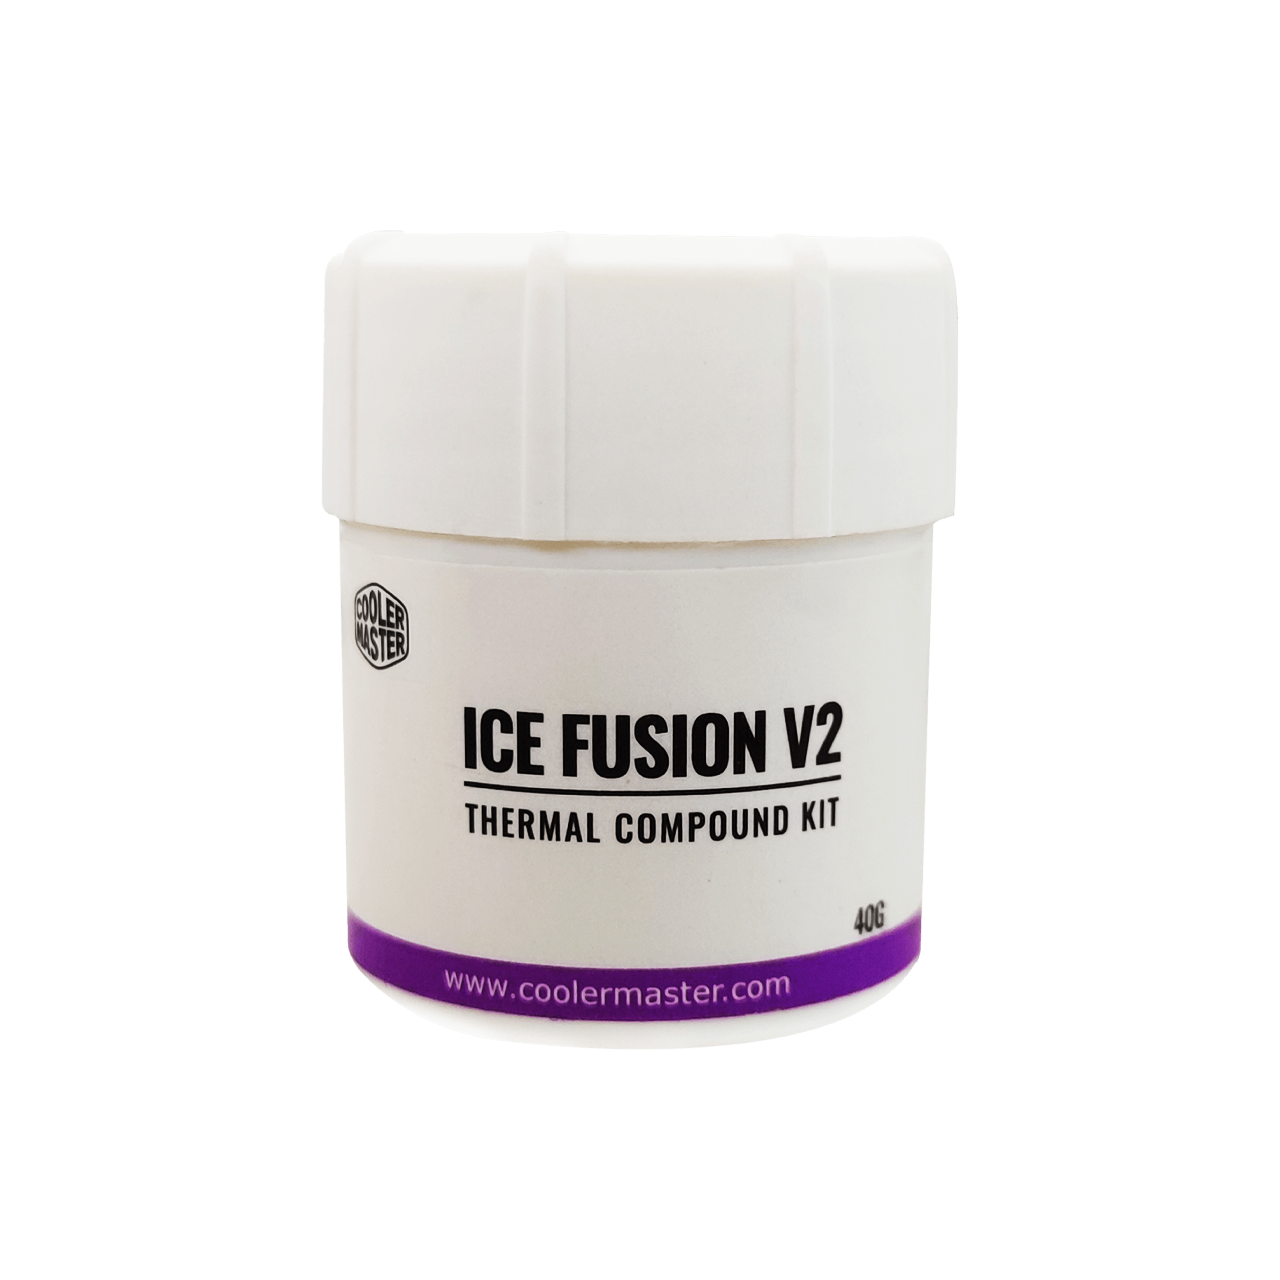 IceFusion V2